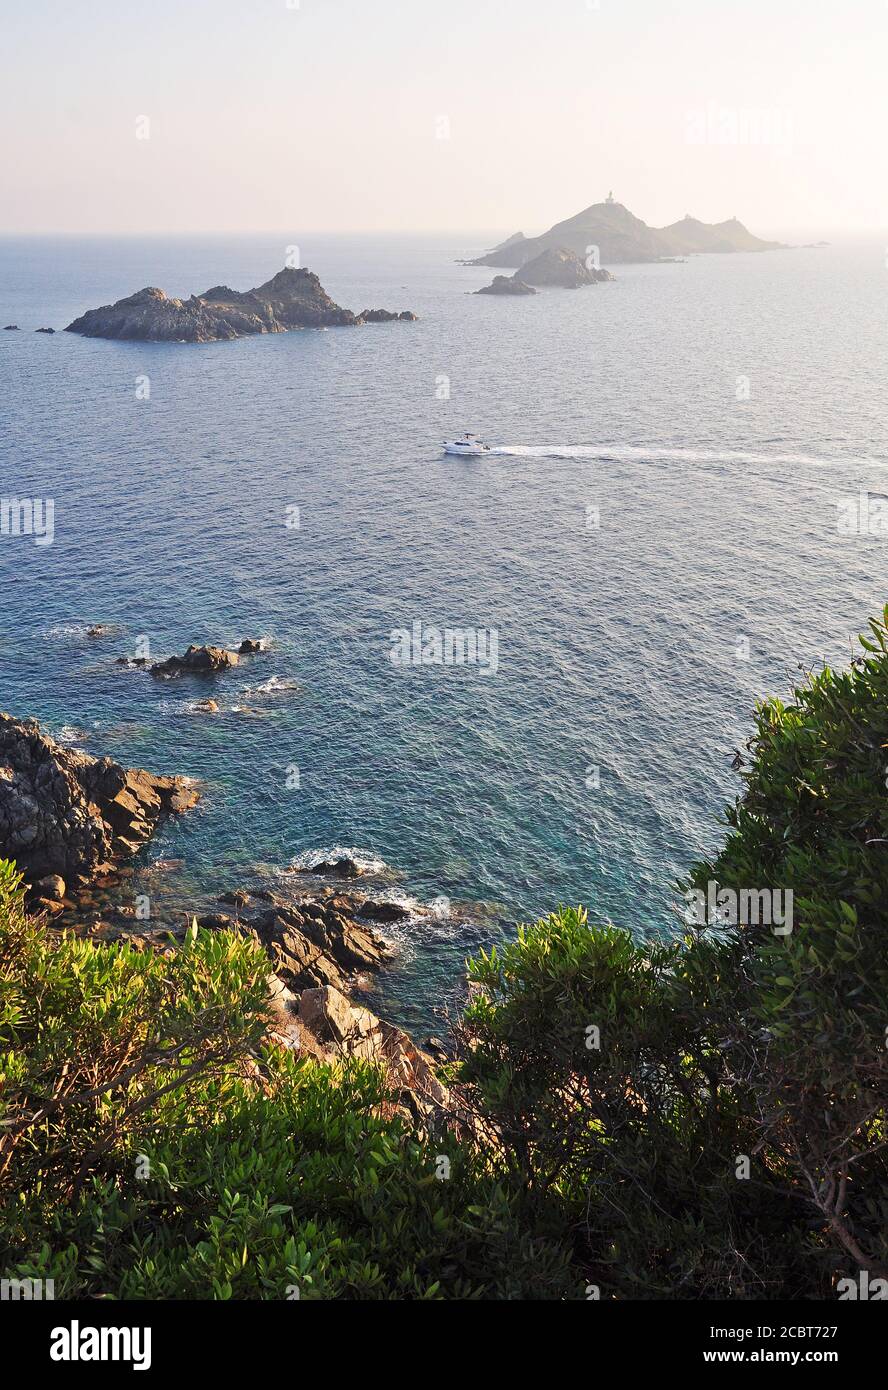 The Sanguinaires islands Ajaccio Southern Corsica Stock Photo